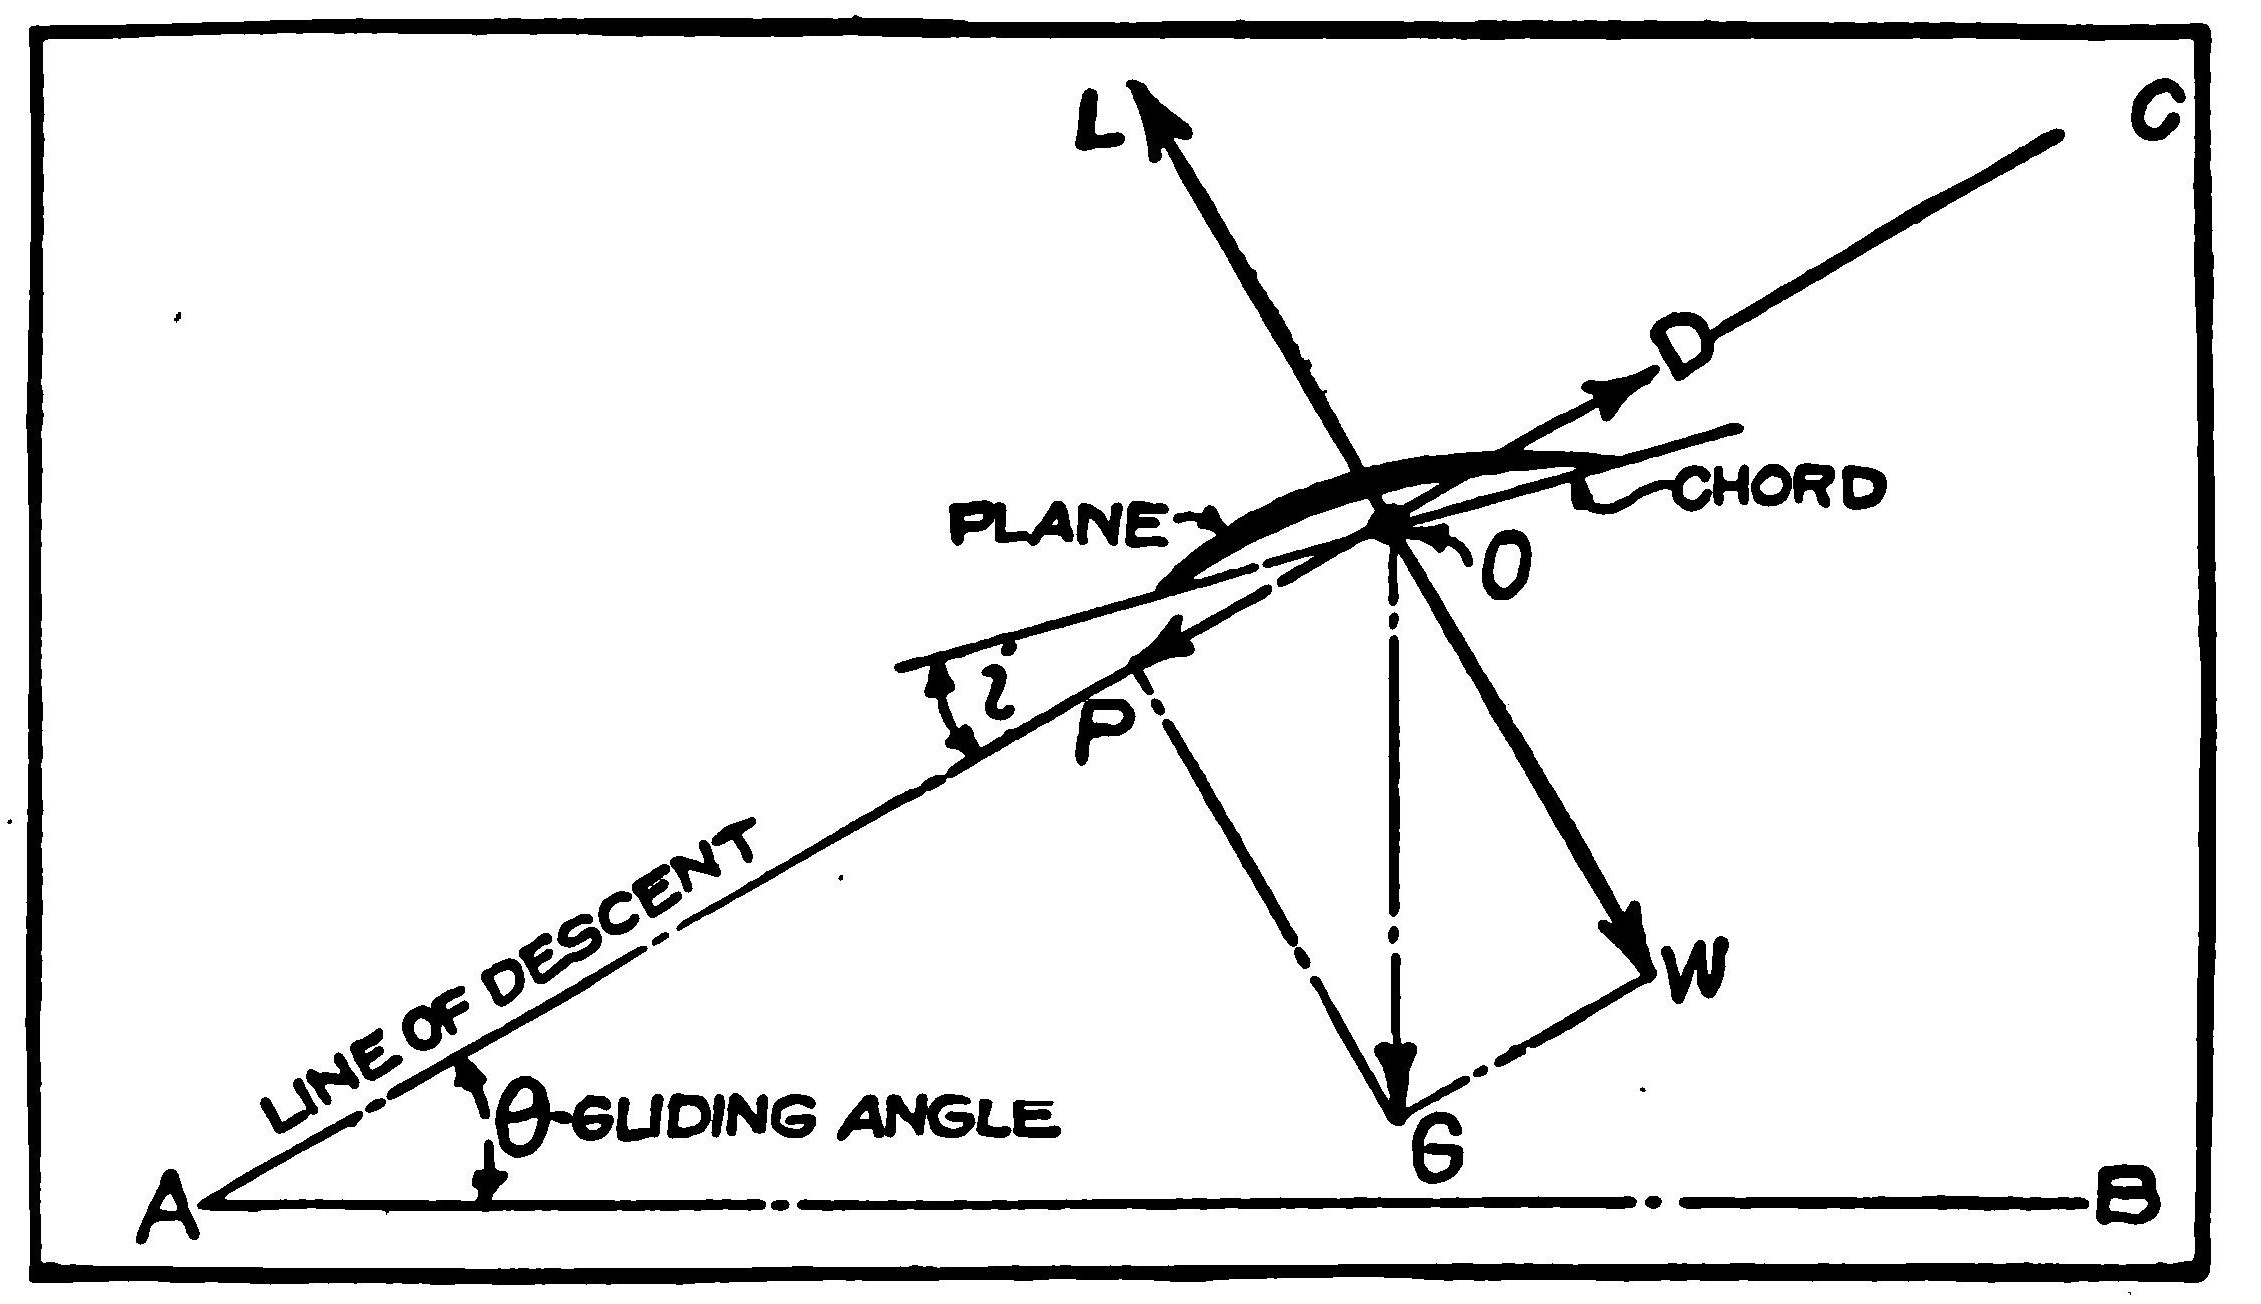 Fig. 2. Gliding Angle Diagram